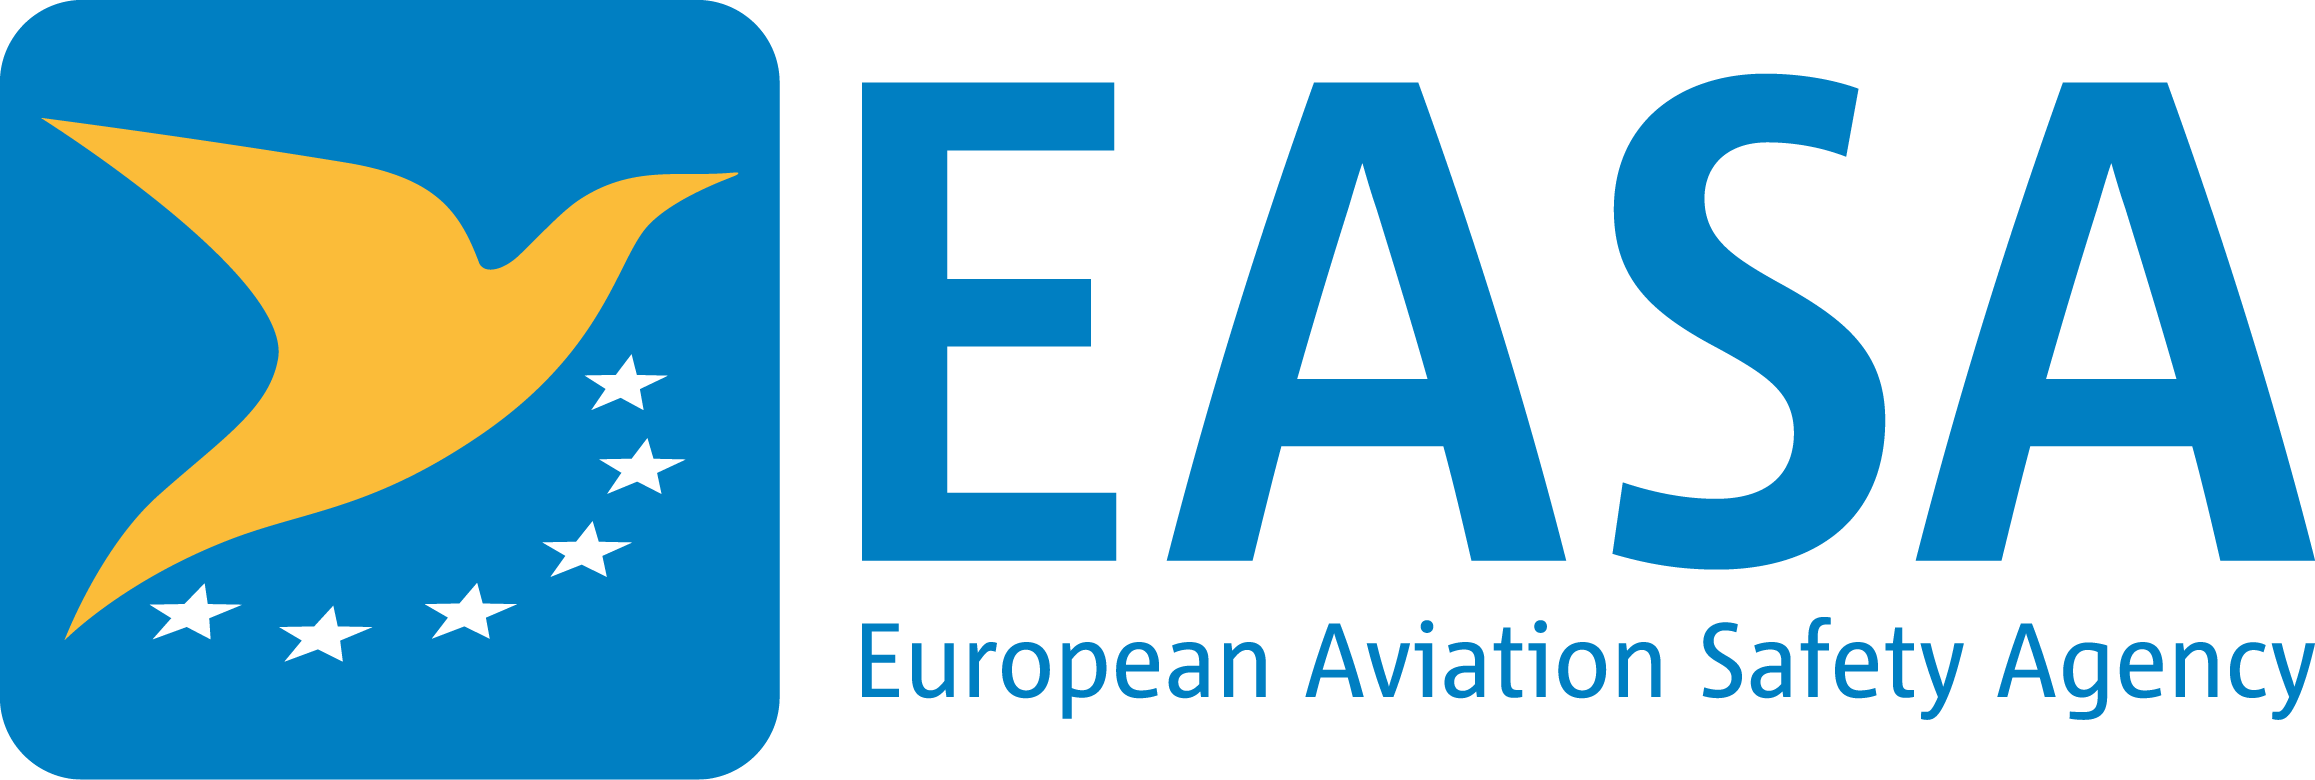 EASA Logo - File:EASA Logo.png - Wikimedia Commons